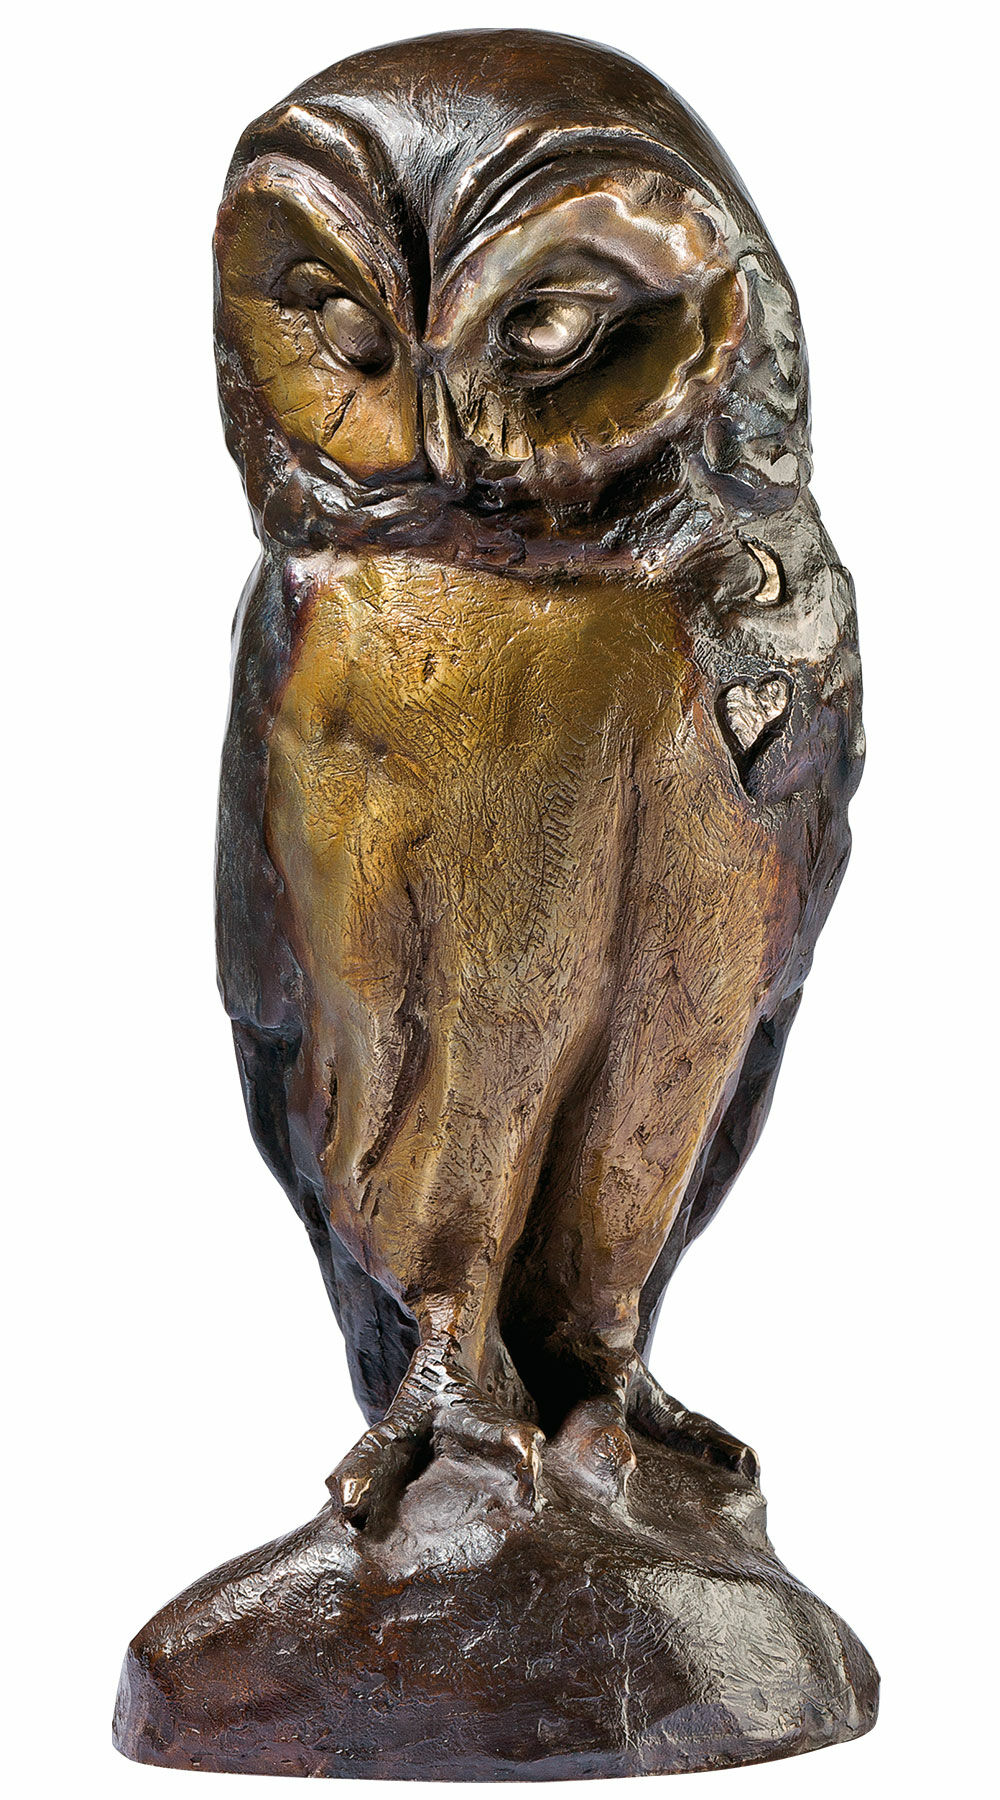 Sculpture "Owl", bronze by Bruno Bruni